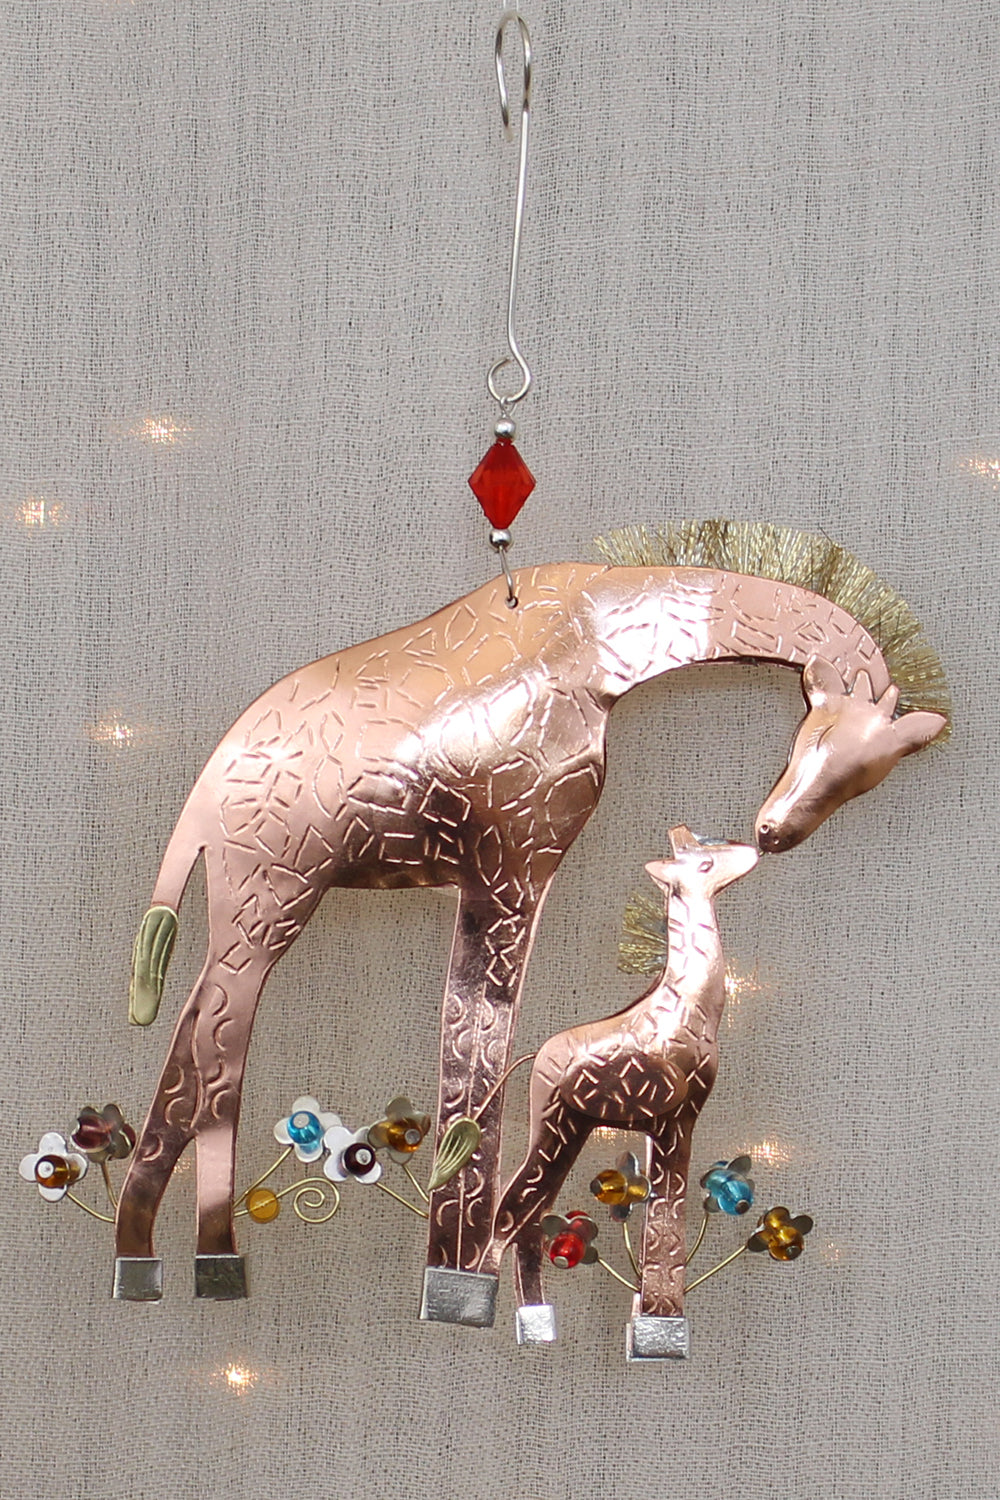 Momma and Baby Giraffe Fair Trade Ornament 04955